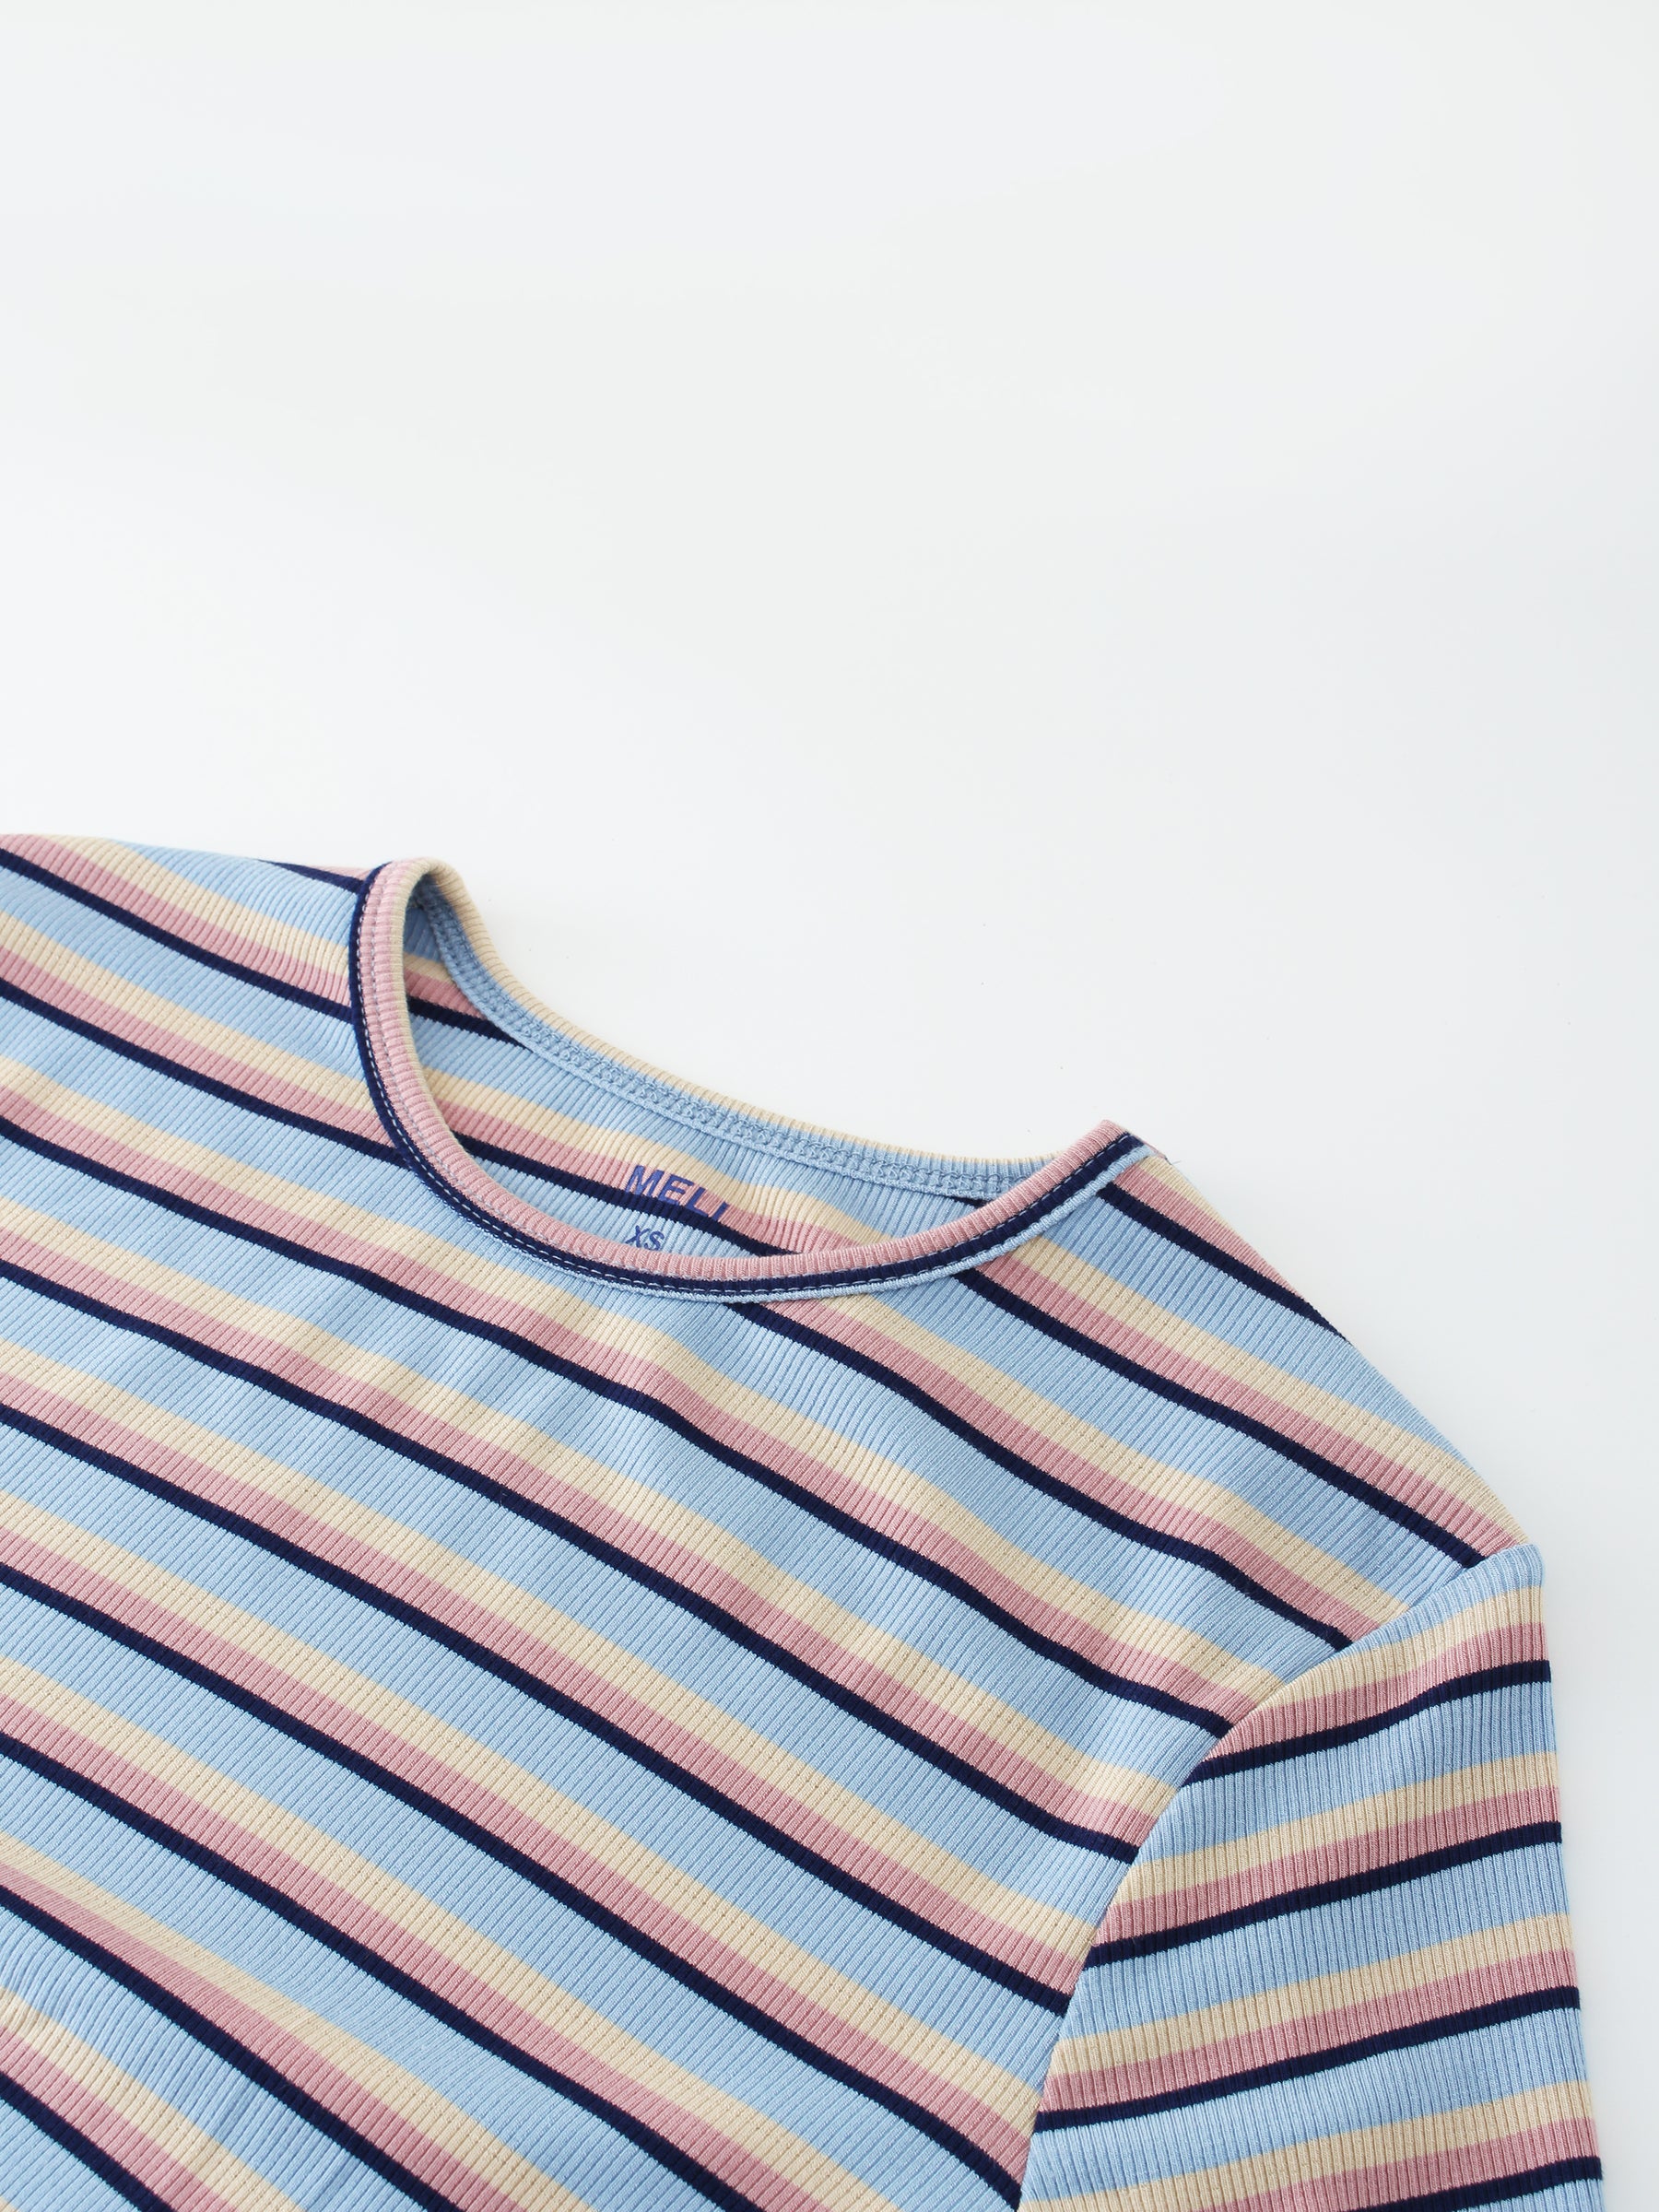 Camiseta acanalada a rayas-Azul/Rosa/Tostado